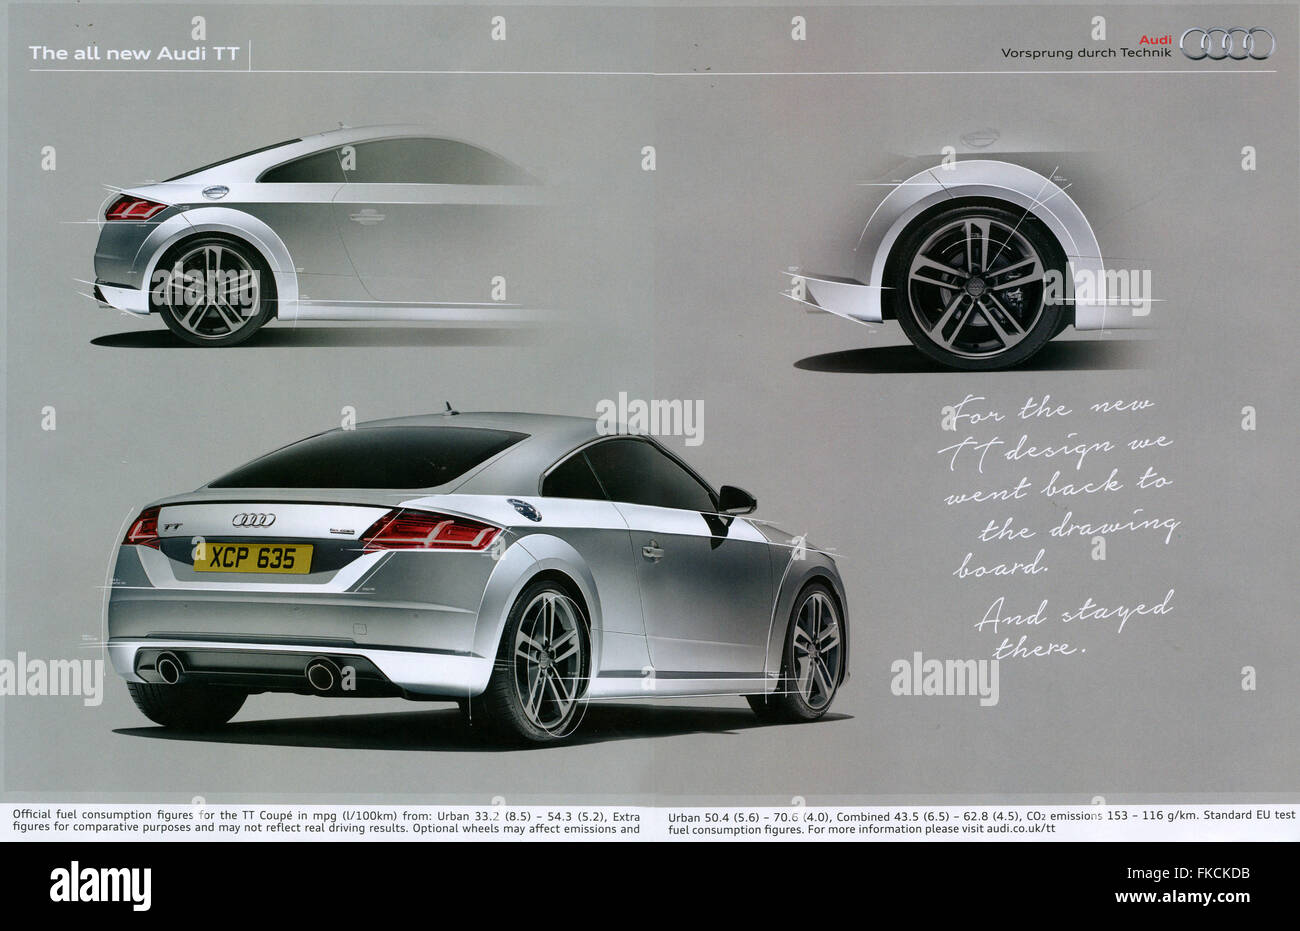 2010s UK Audi Magazine Advert Stock Photo